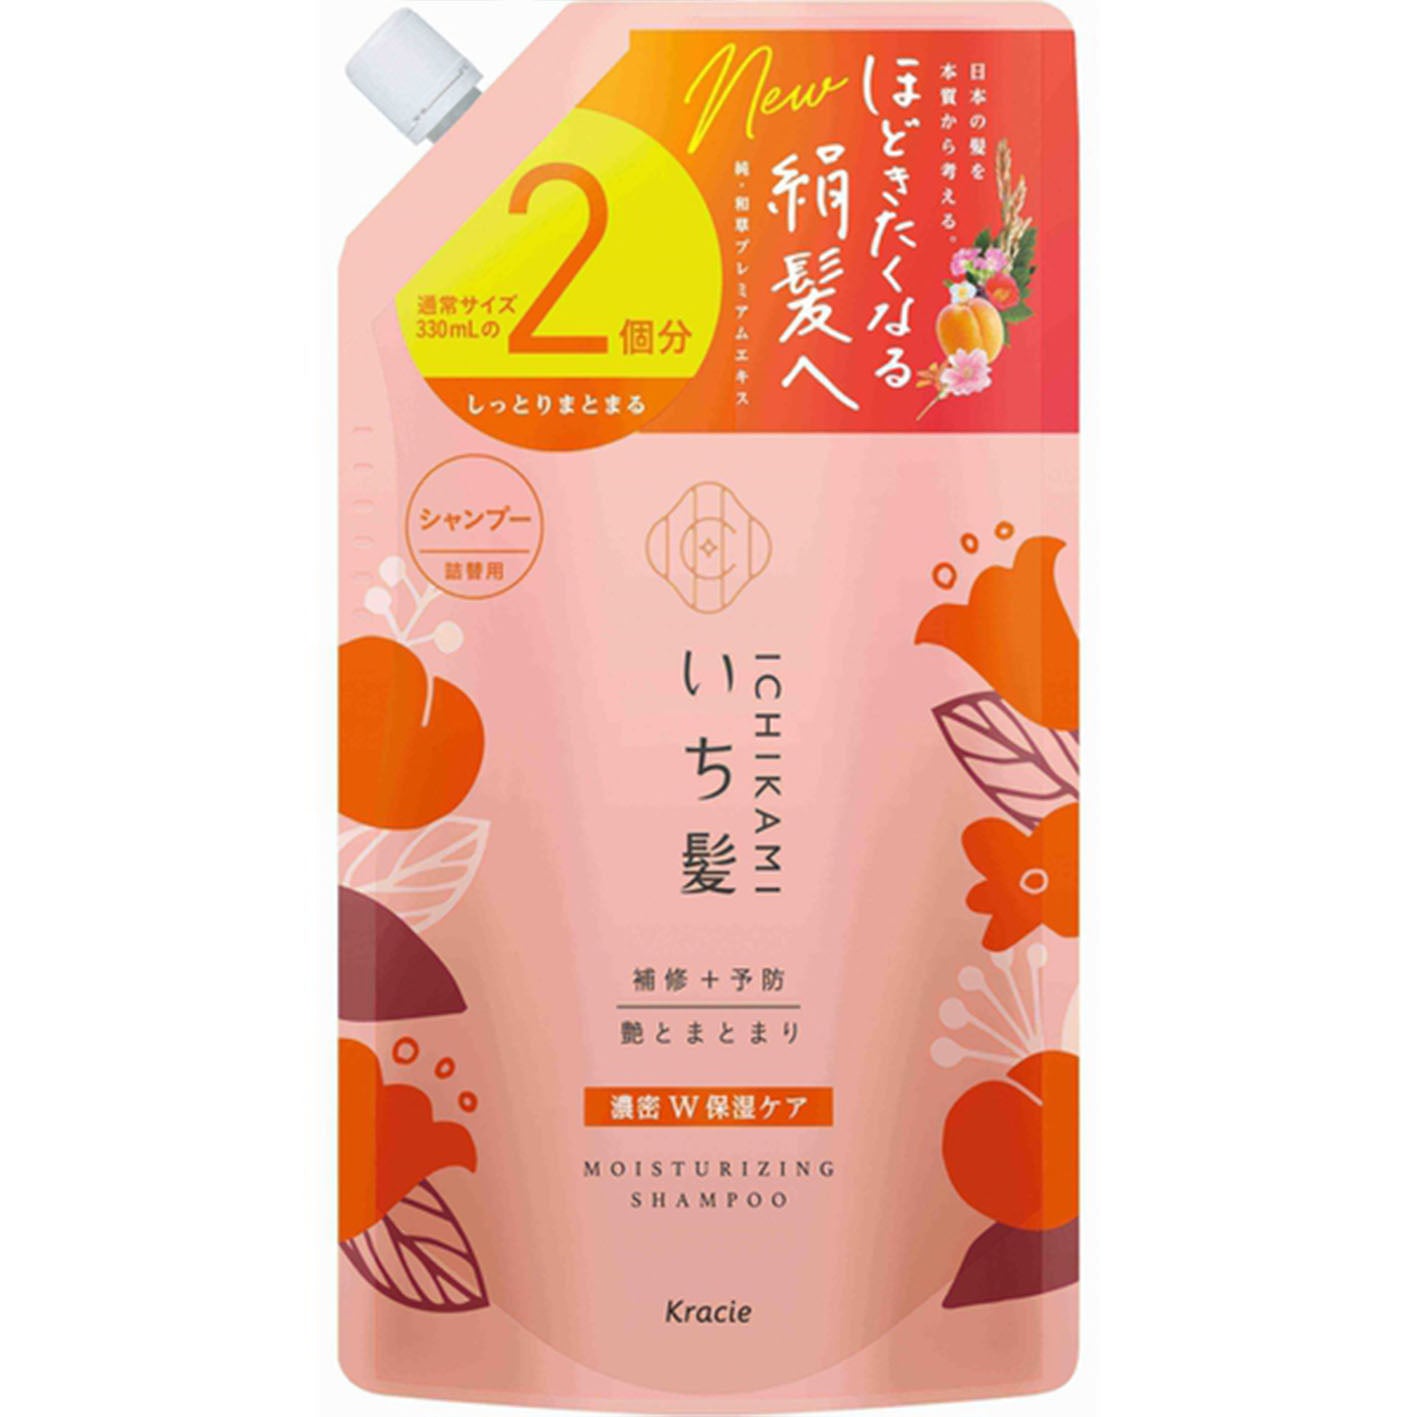 Ichikami Dense W Moisturizing Care Hair Shampoo Pump - 660ml - Refill - Harajuku Culture Japan - Japanease Products Store Beauty and Stationery